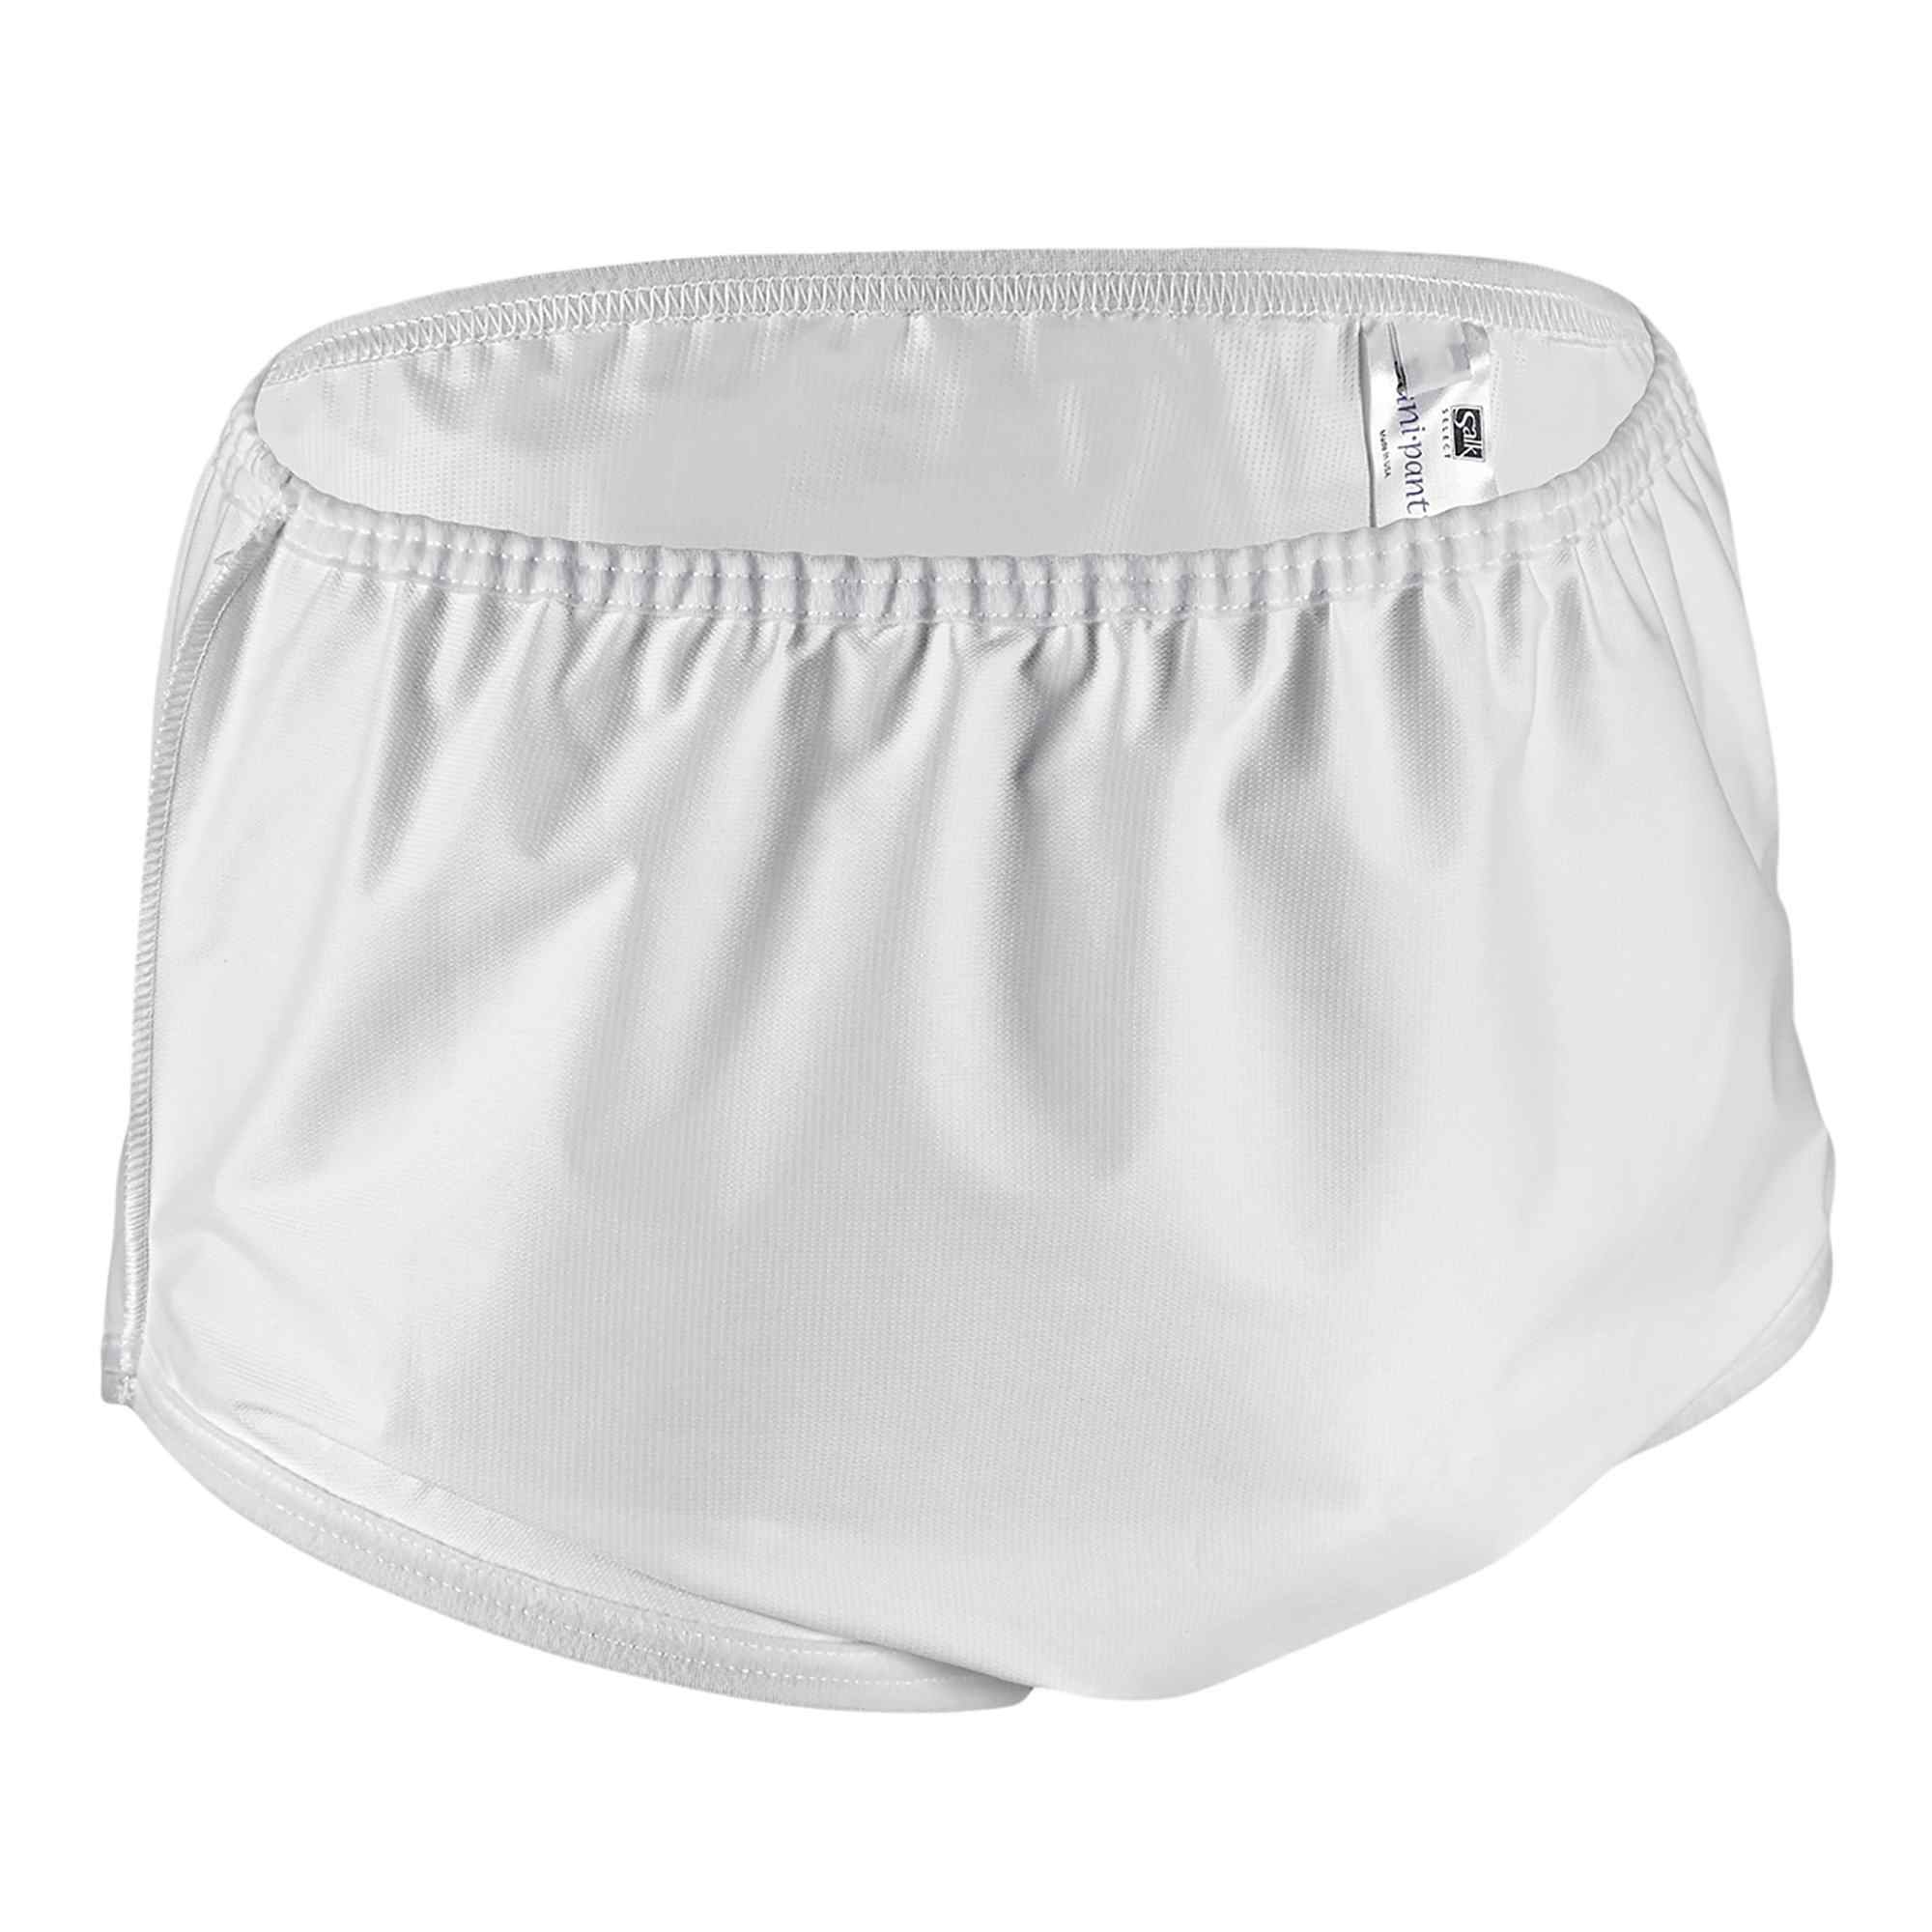 Sani-Pant Nylon Protective Underwear